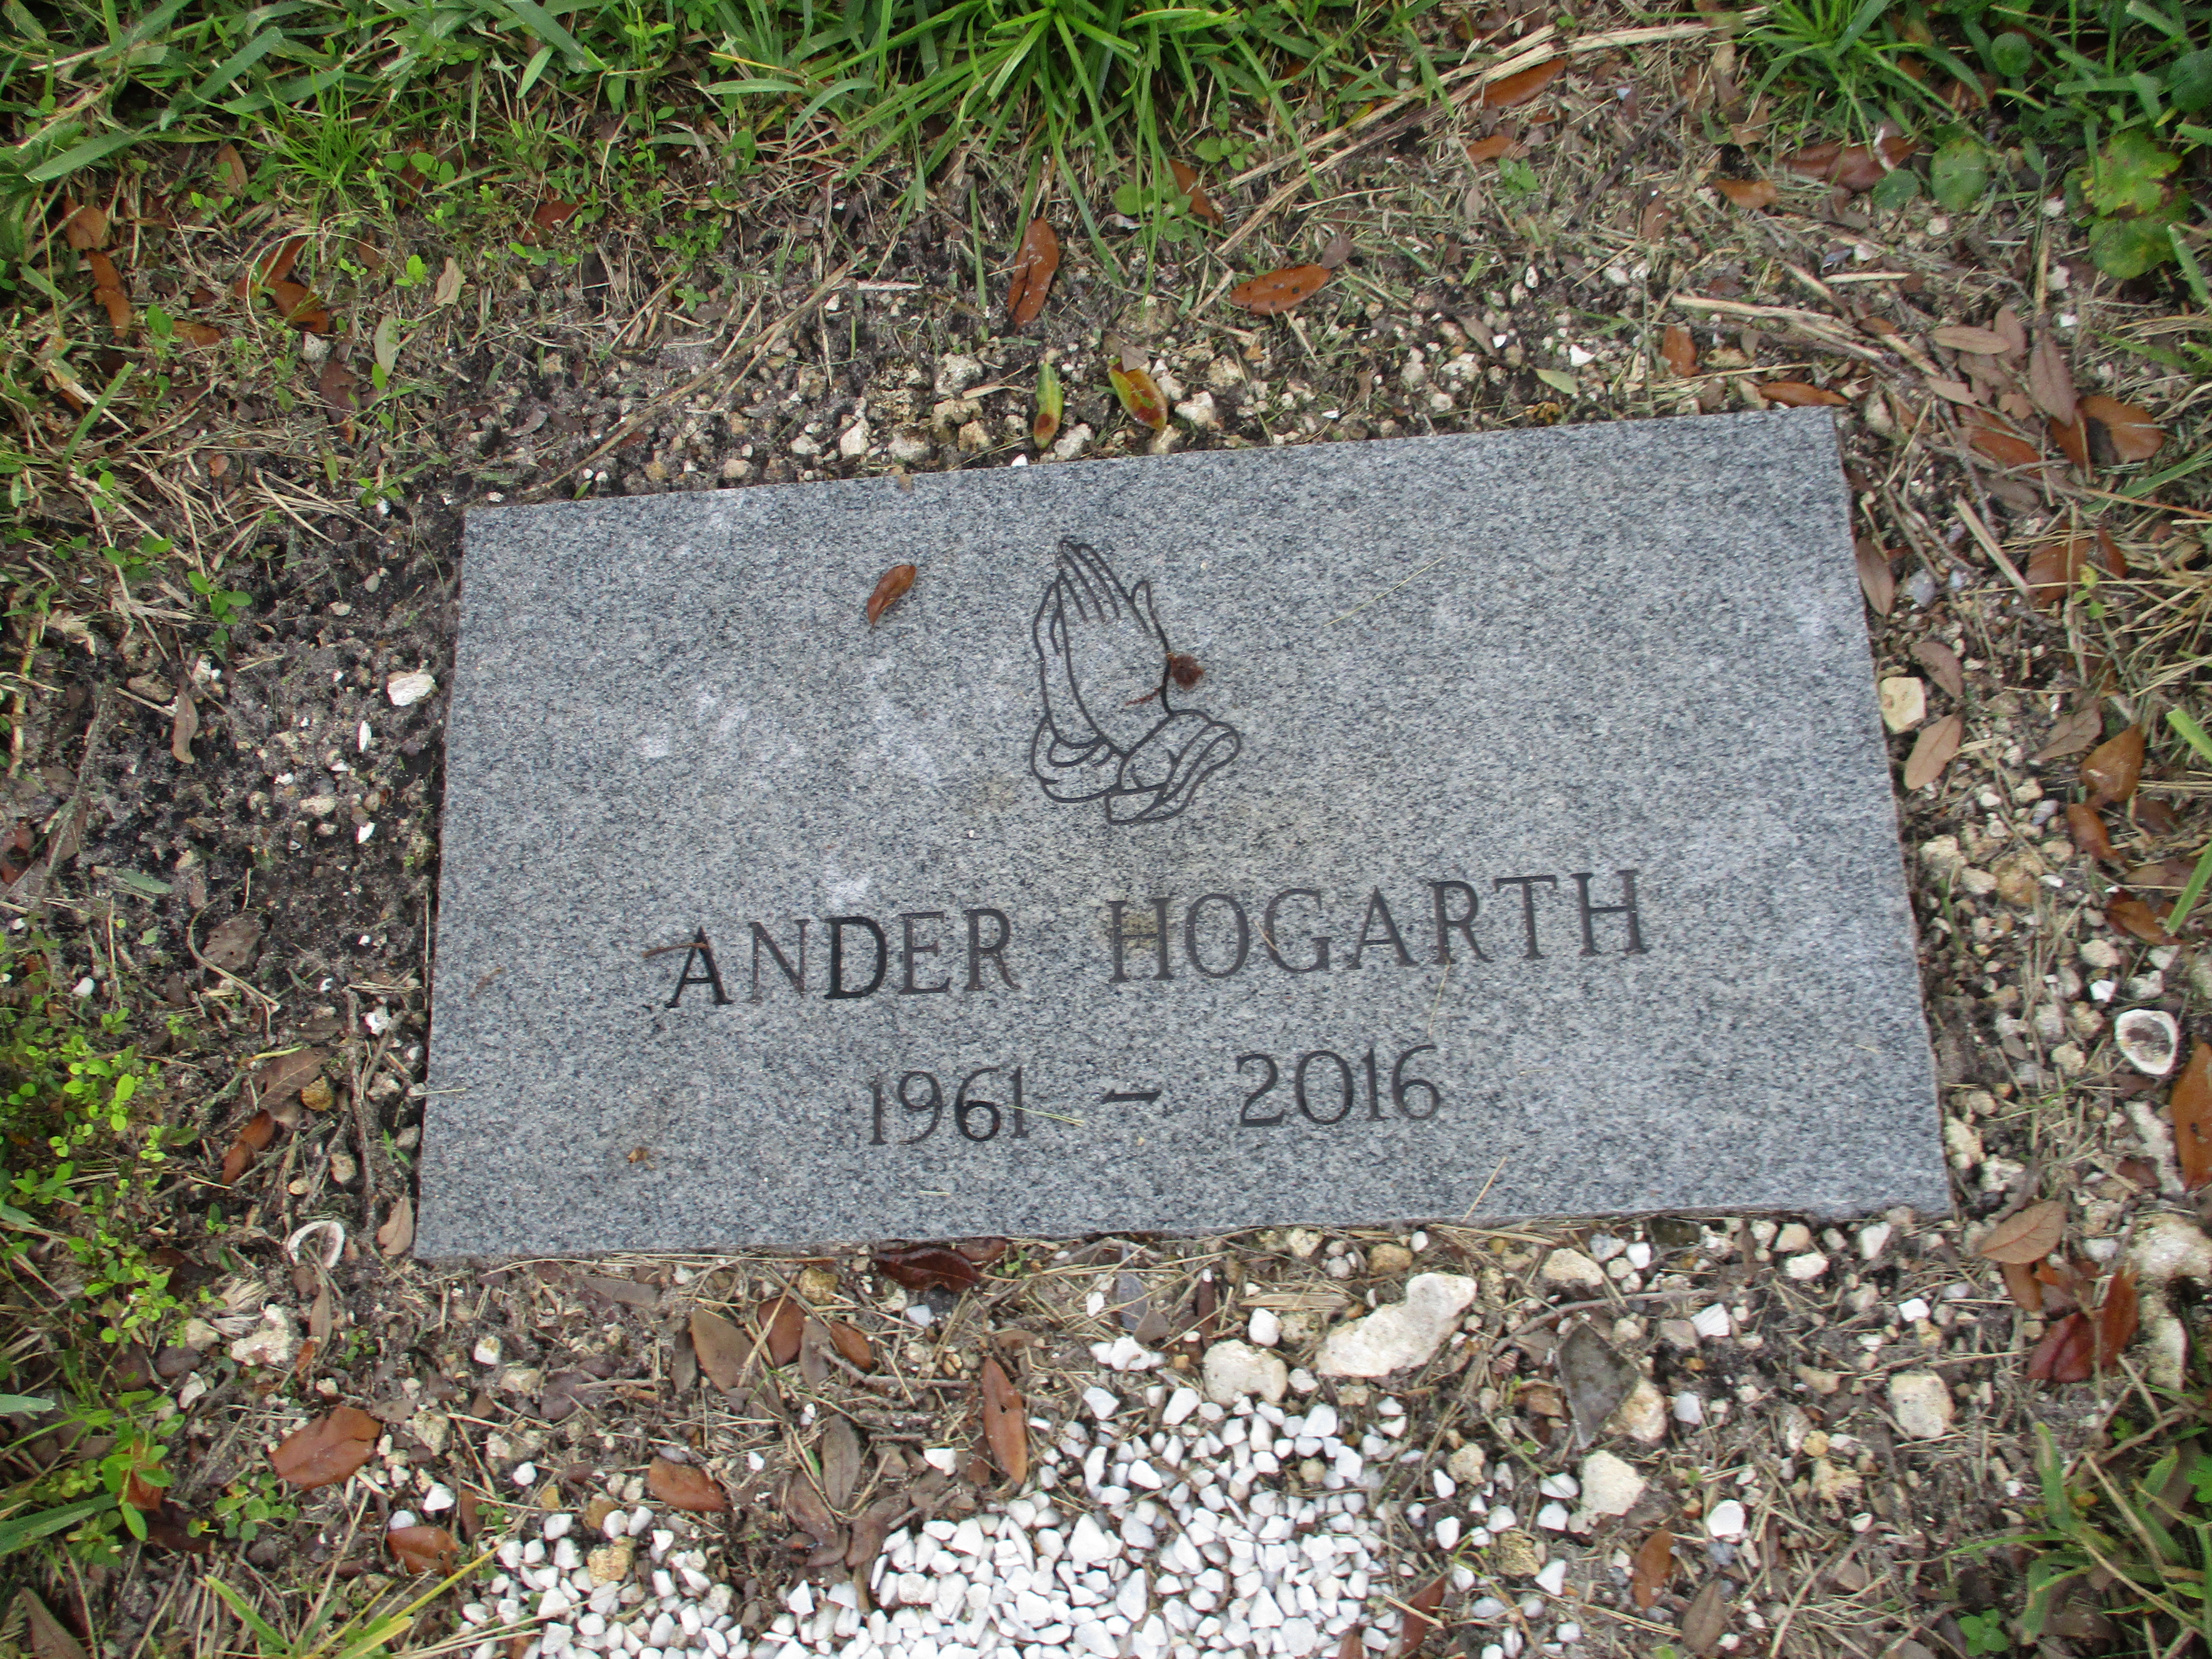 Ander Hogarth